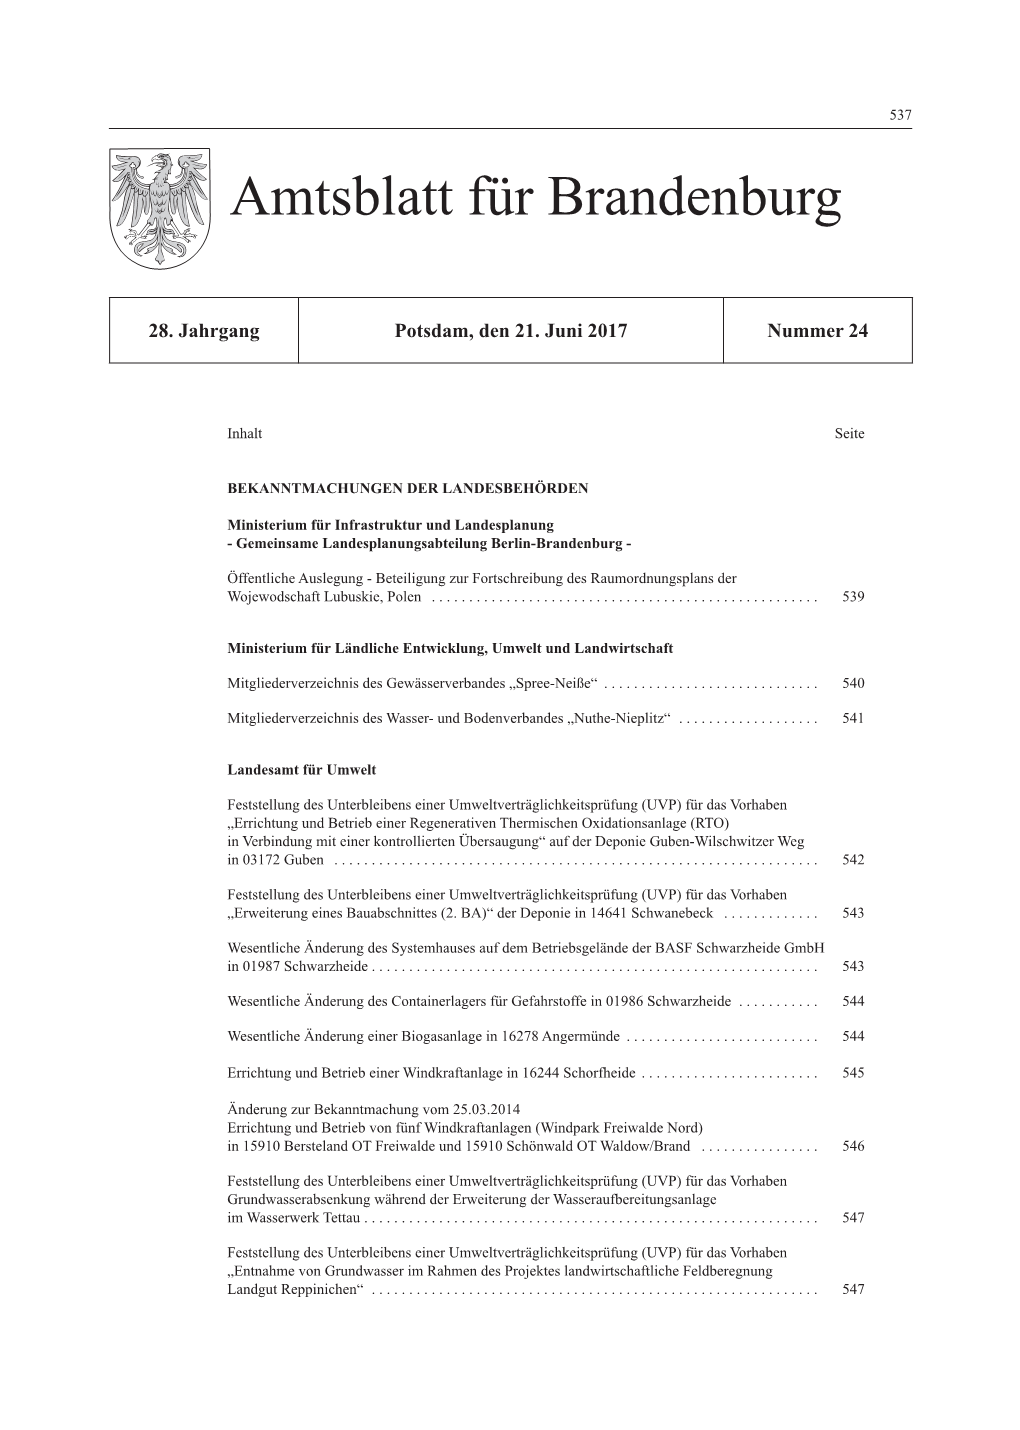 Amtsblatt Für Brandenburg, 2017, Nummer 24